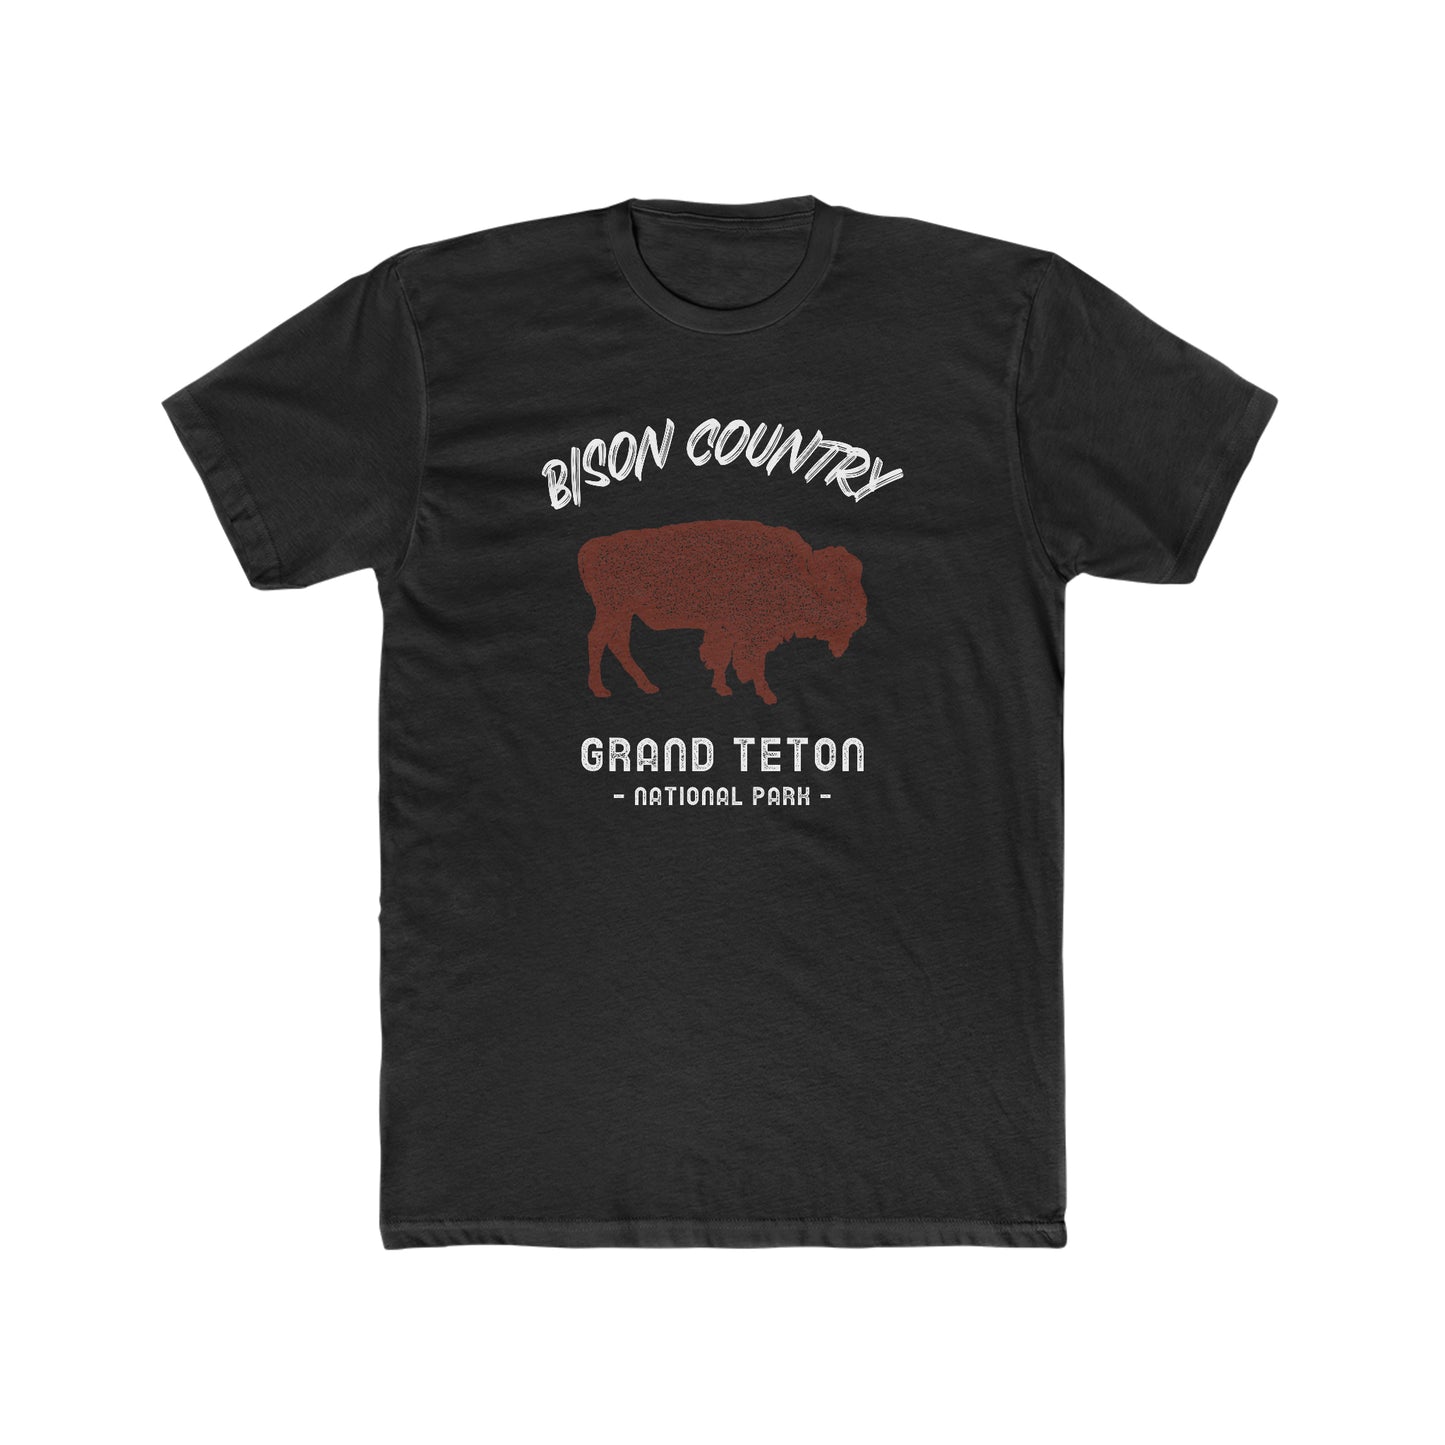 Grand Teton National Park T-Shirt - Bison Country